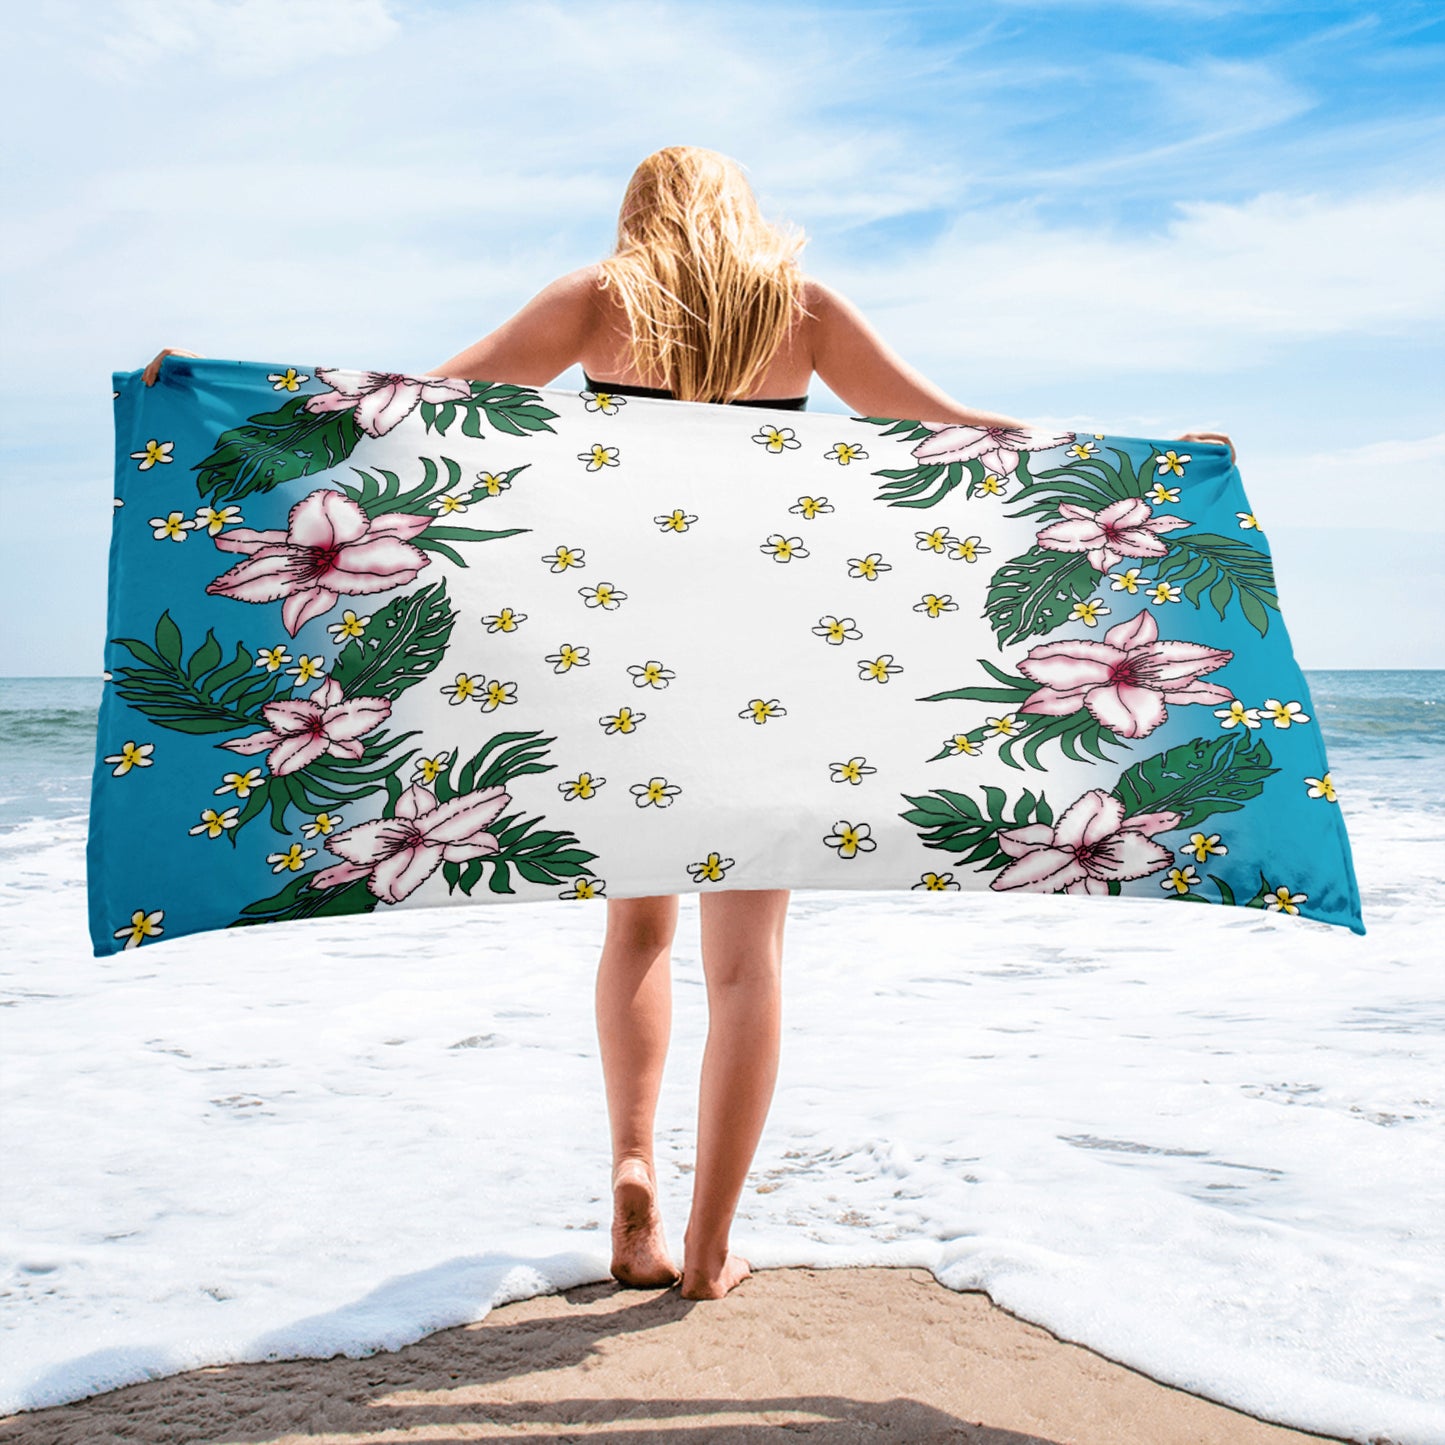 "Tropical Delight" Beach Towel